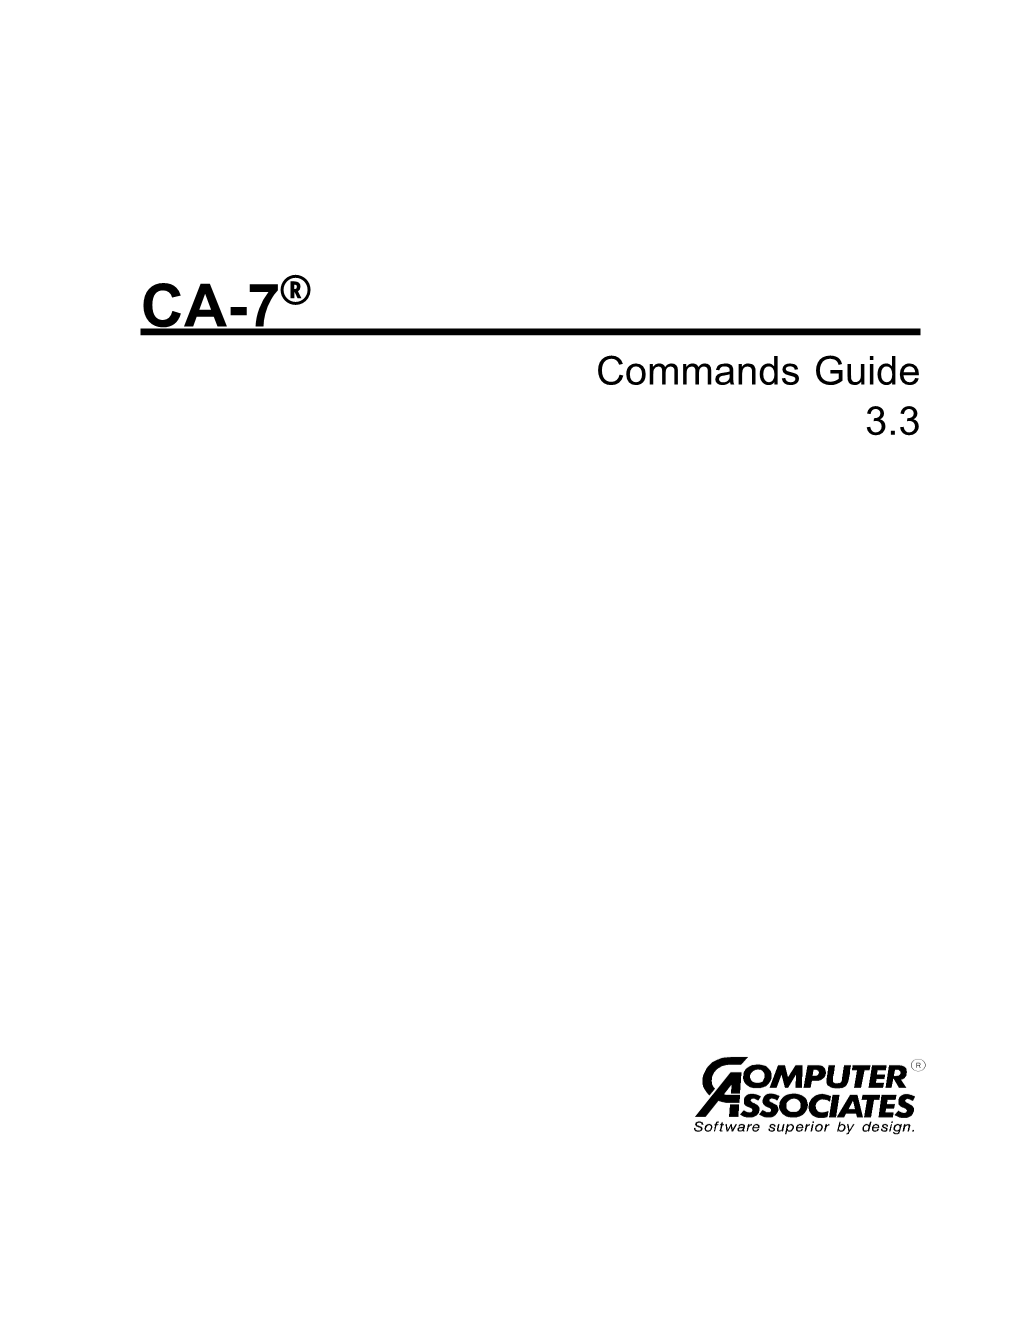 CA-7 3.3 Commands Guide 2.20 /OPERID